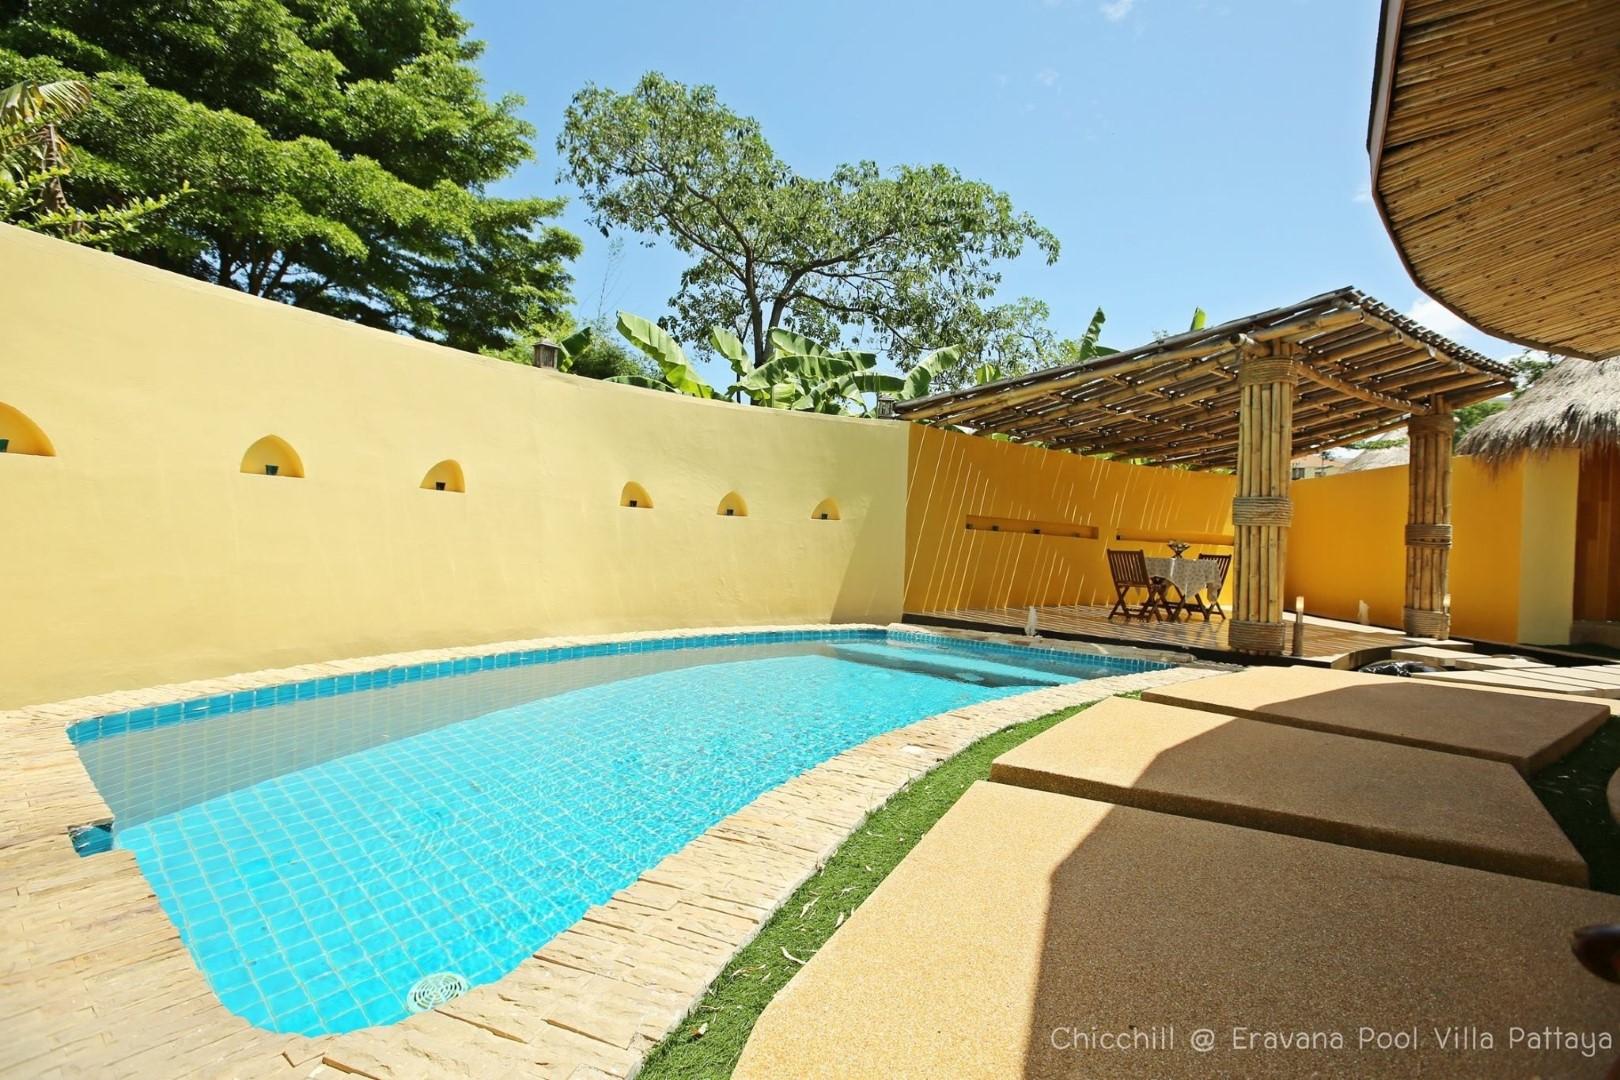 Swimming Pool 4 Chicchill @ Eravana, Pool Villa Pattaya